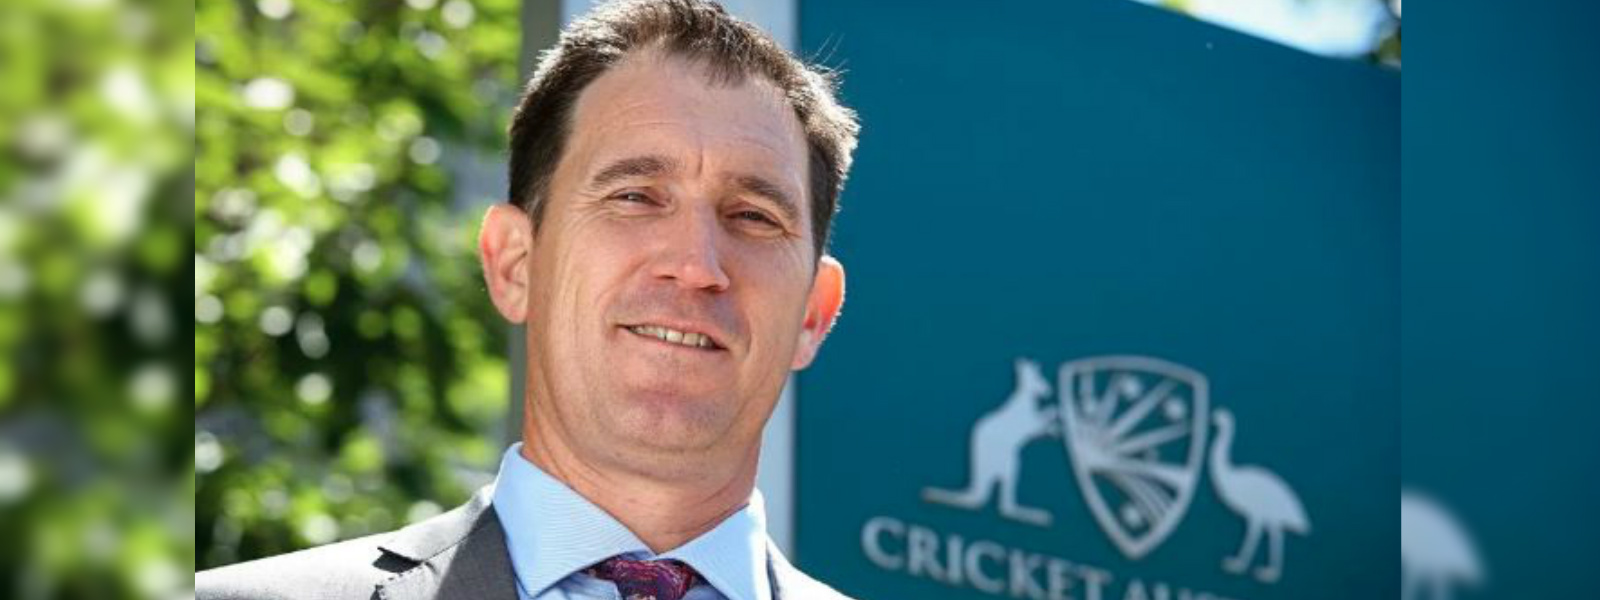 James Sutherland resigns as Cricket Australia CEO